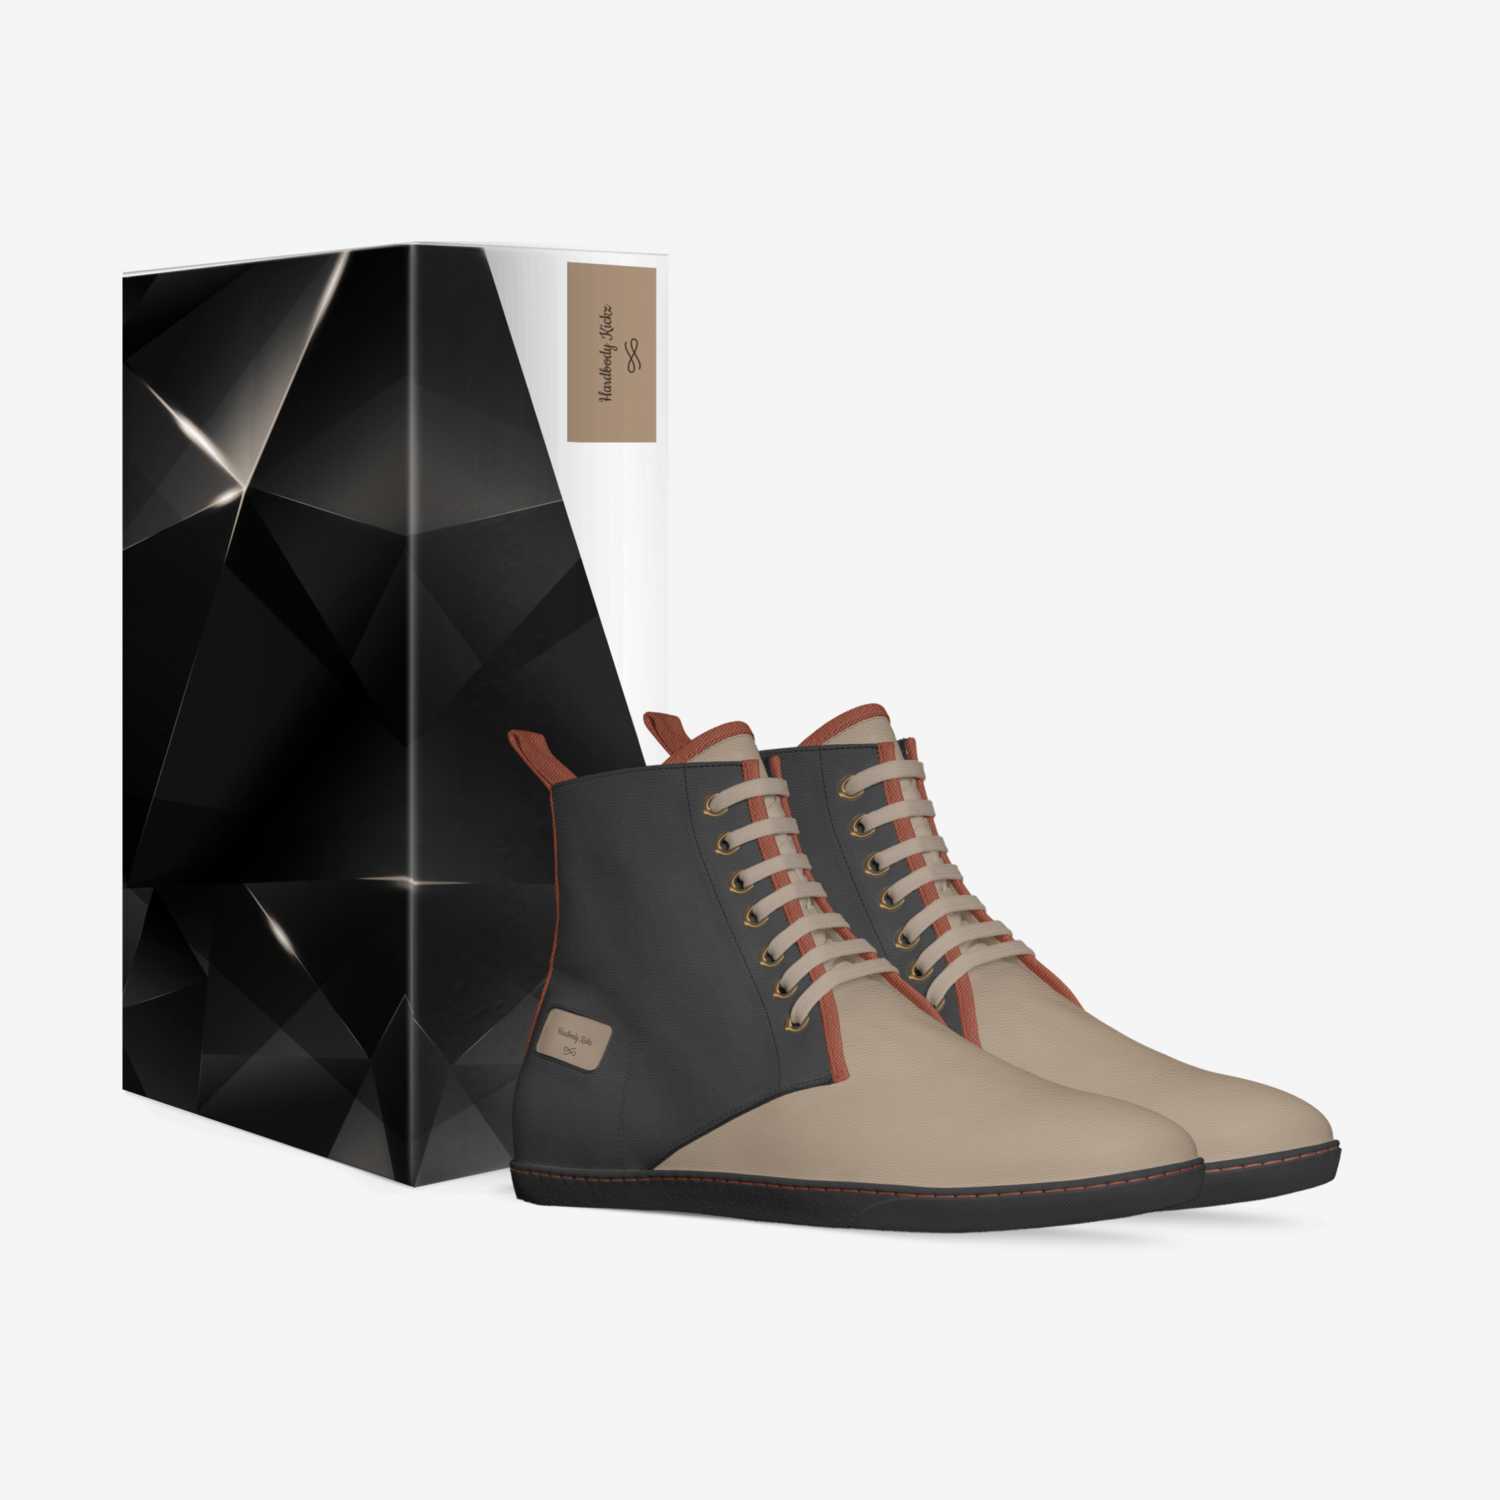 Hardbody Kickz custom made in Italy shoes by Sanchez Woods | Box view